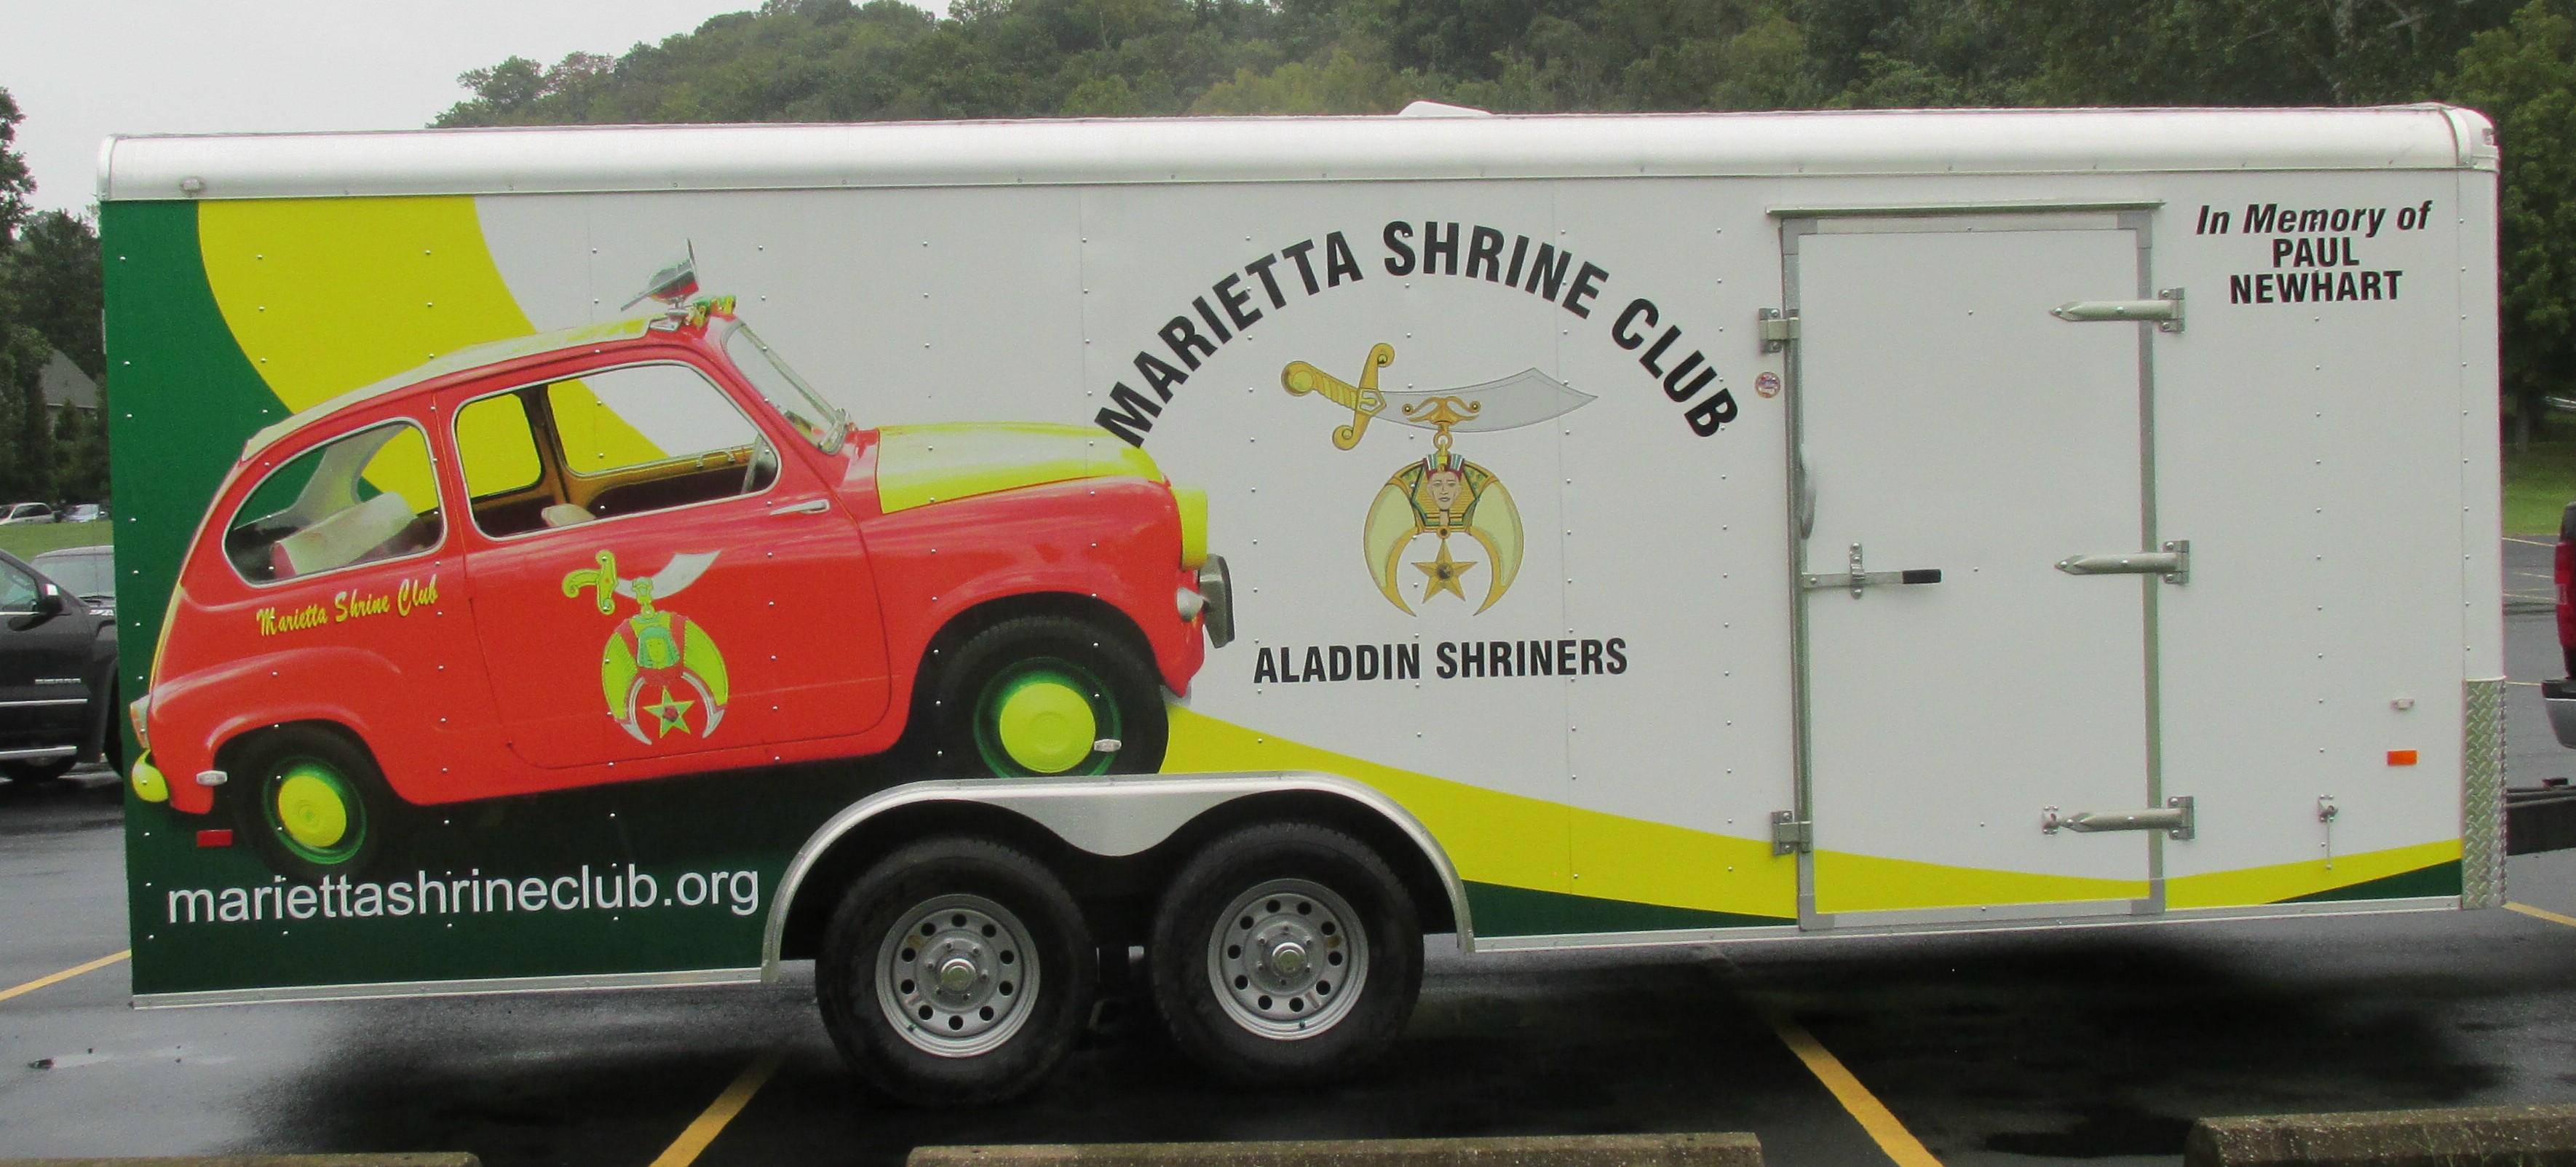 Marietta Shrine Club Car Trailer